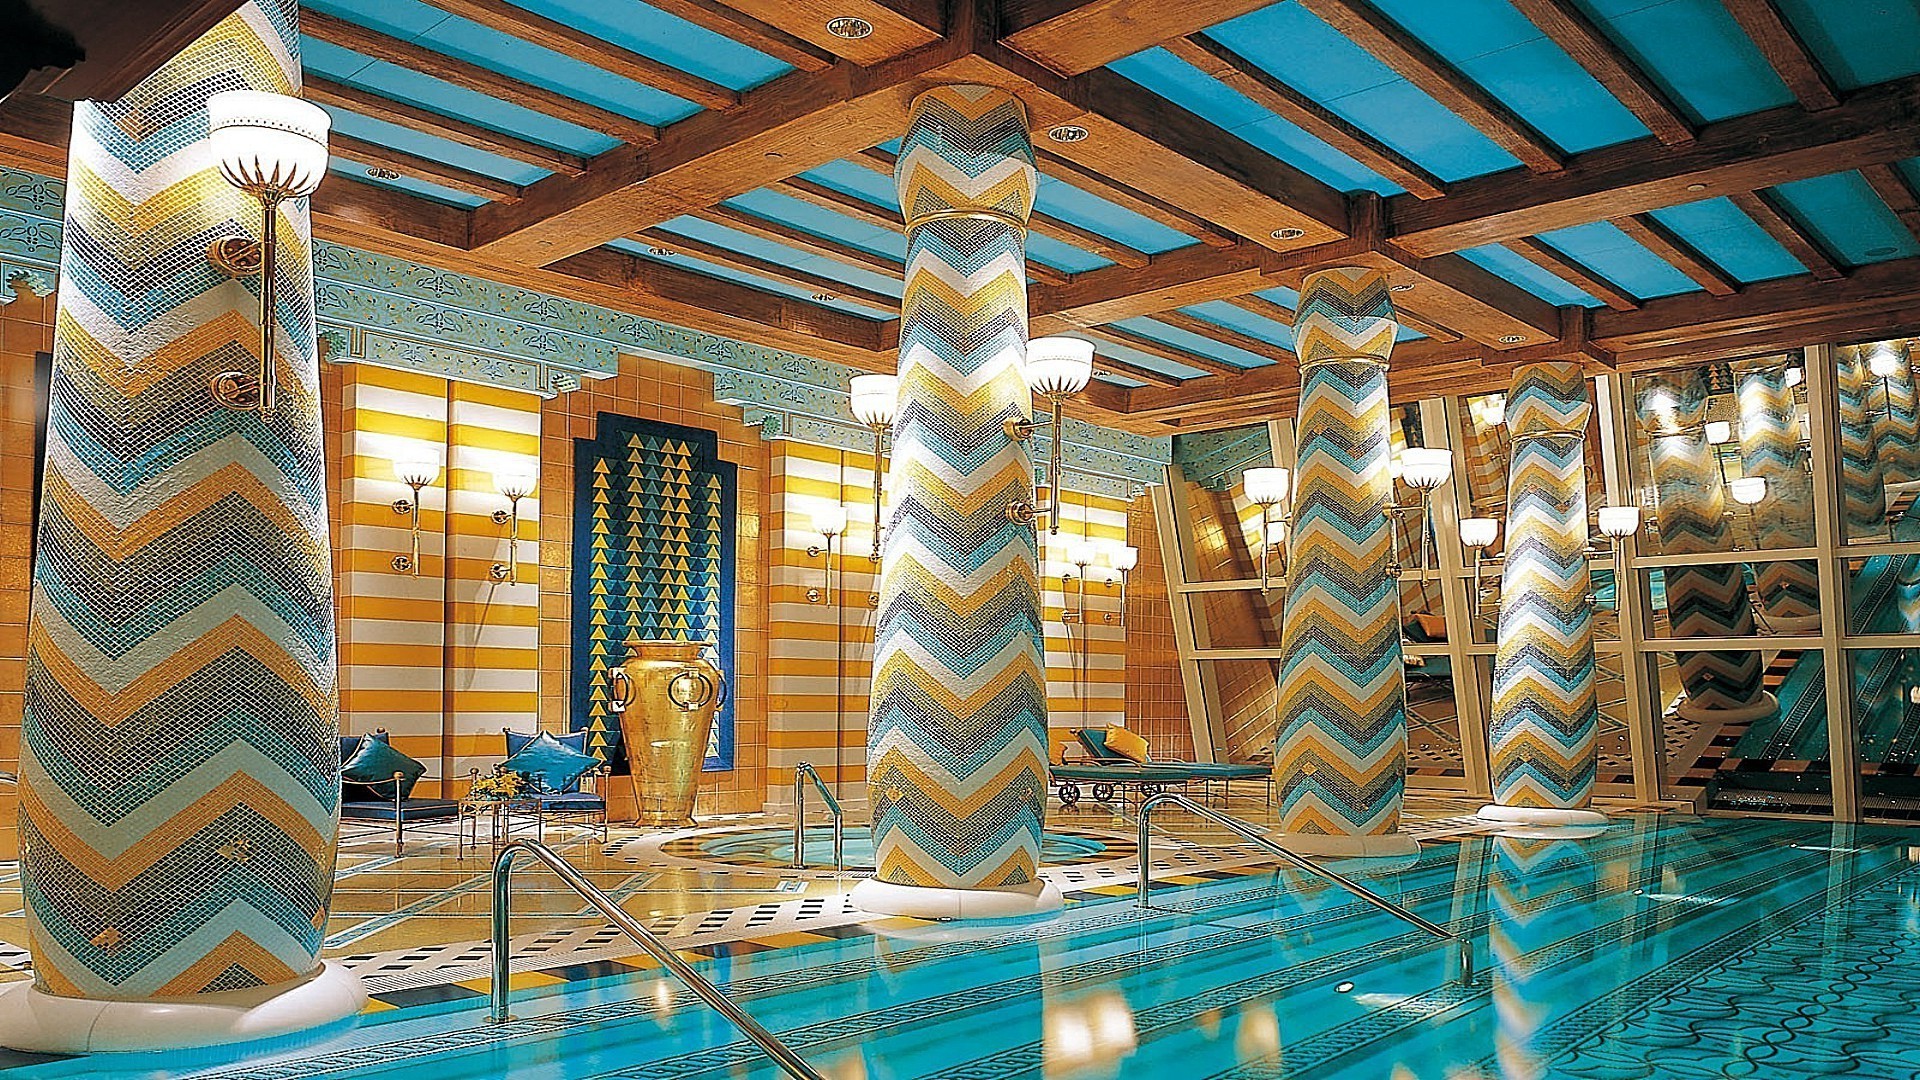 pools hotel travel resort vacation building tourism architecture luxury design